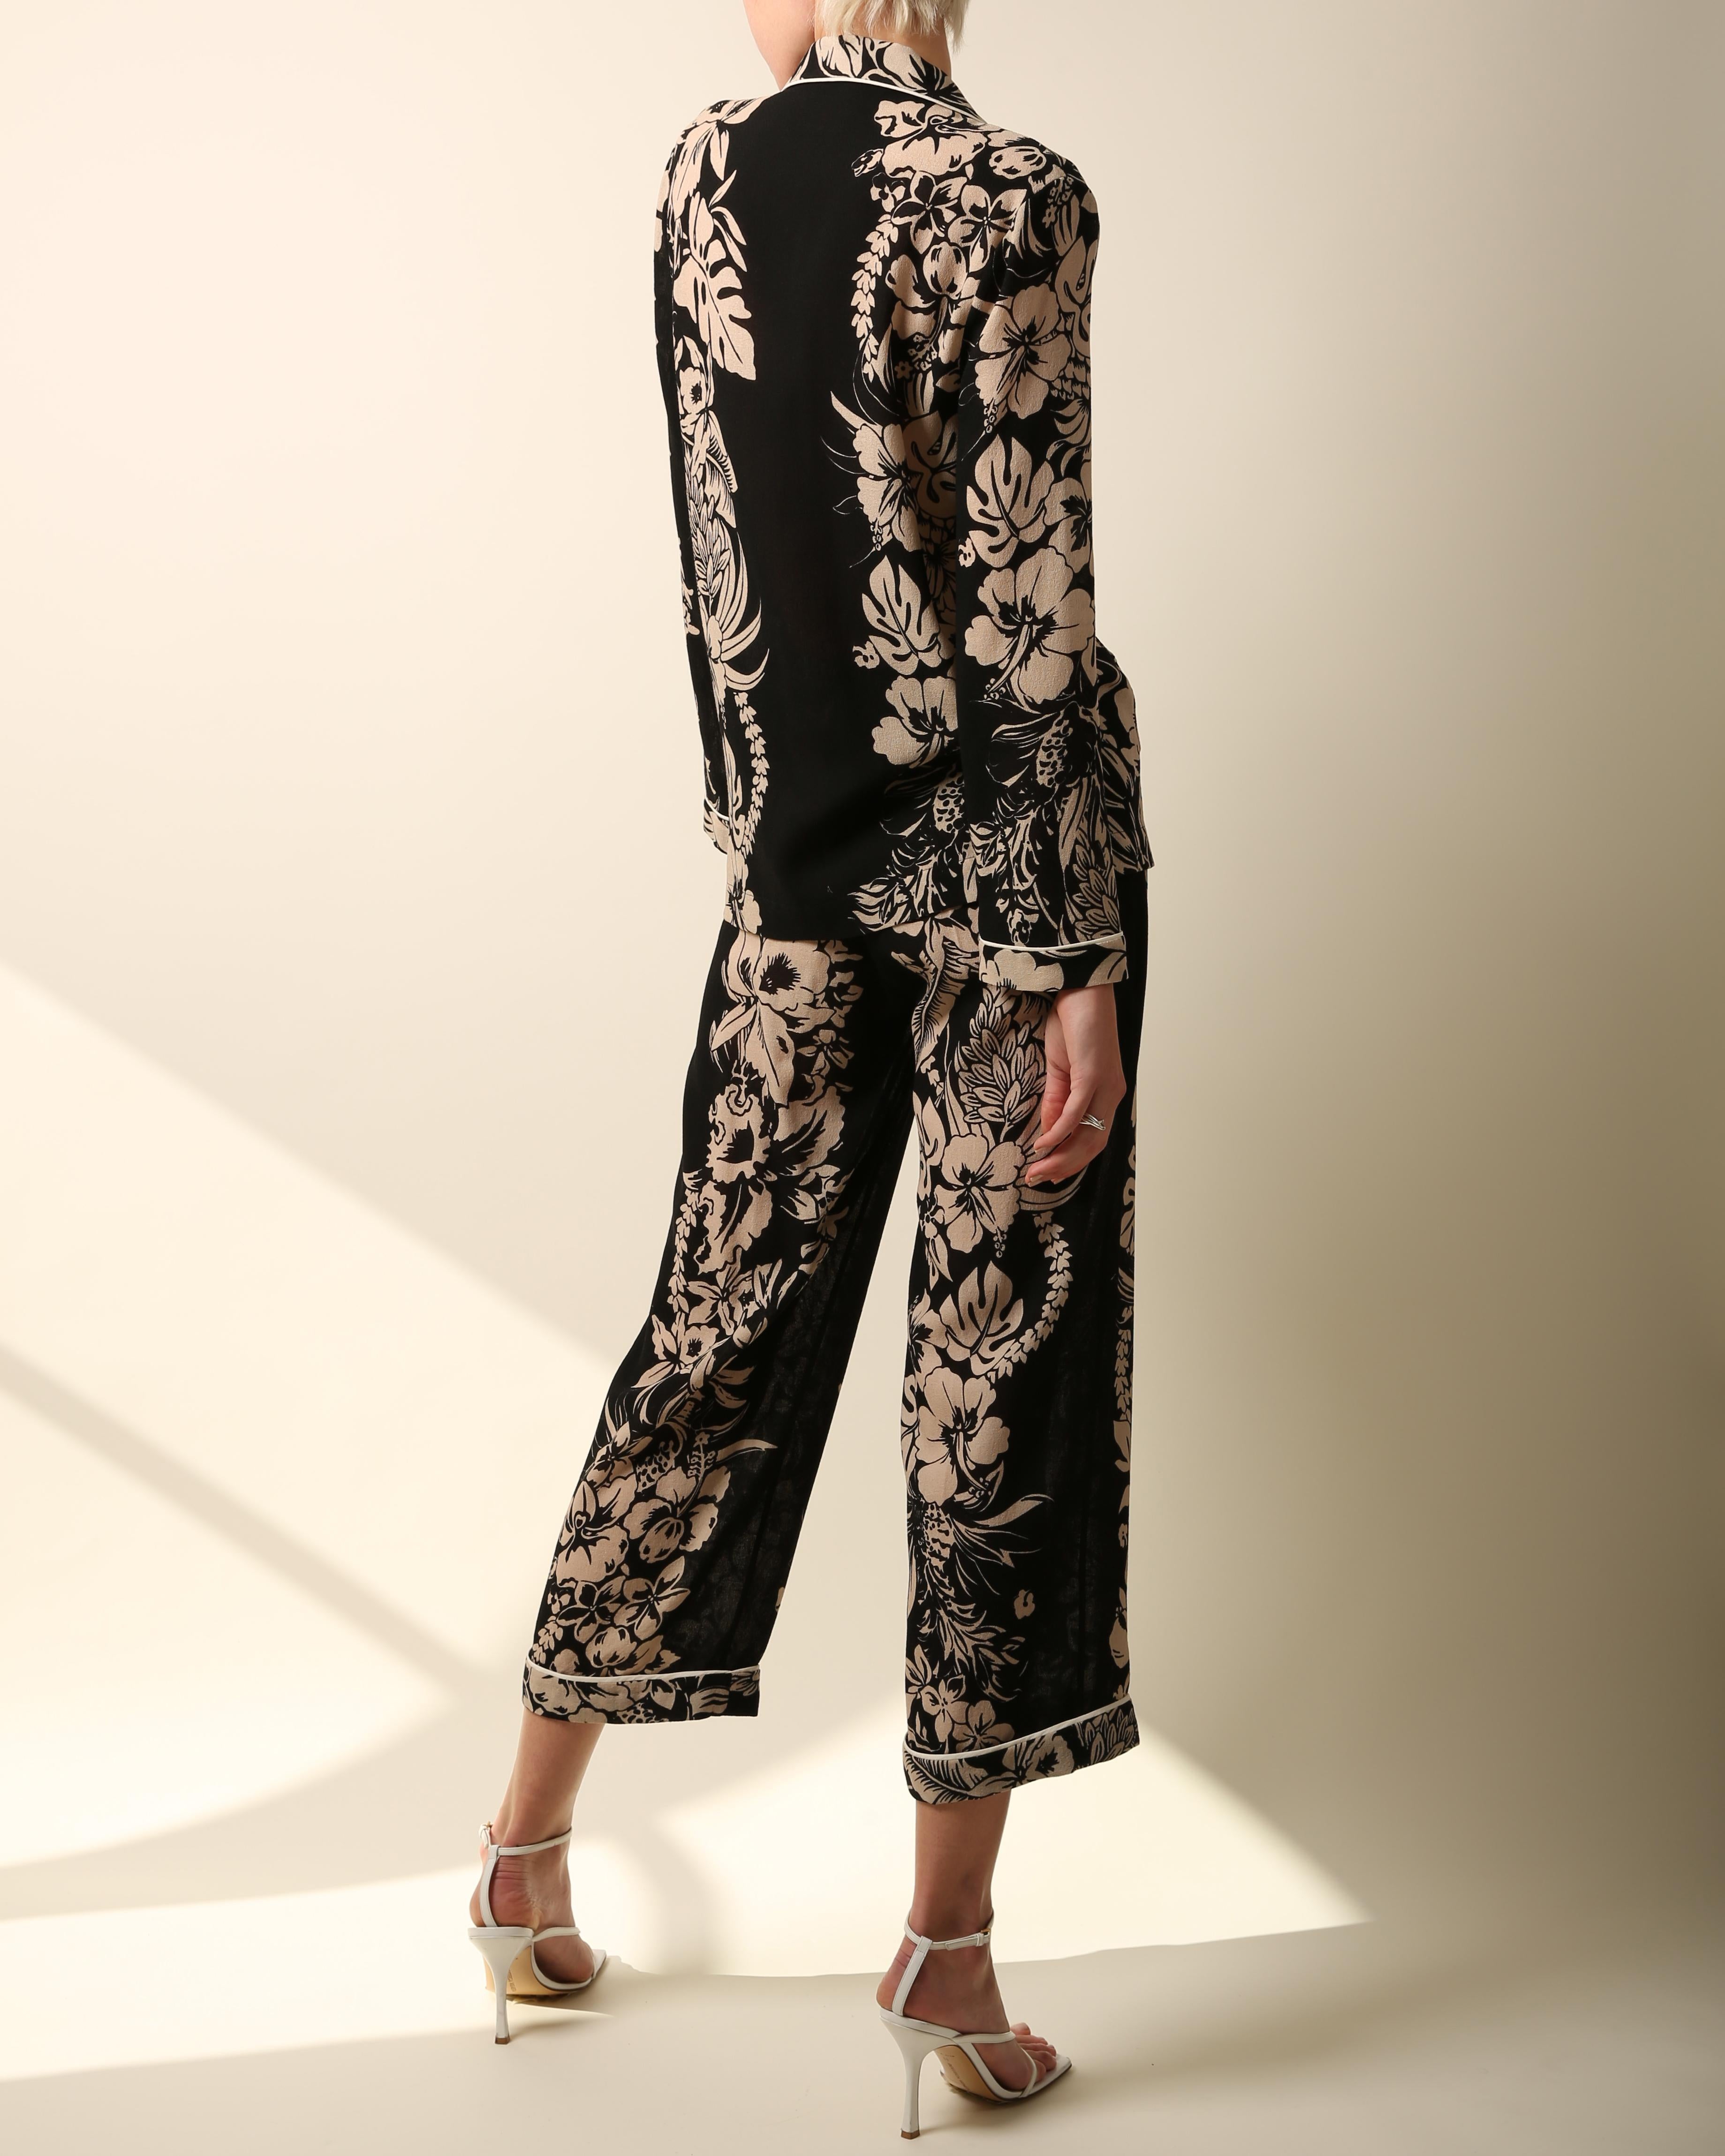 Valentino pyjama style black nude floral print blouse wide dress pants jumpsuit 6